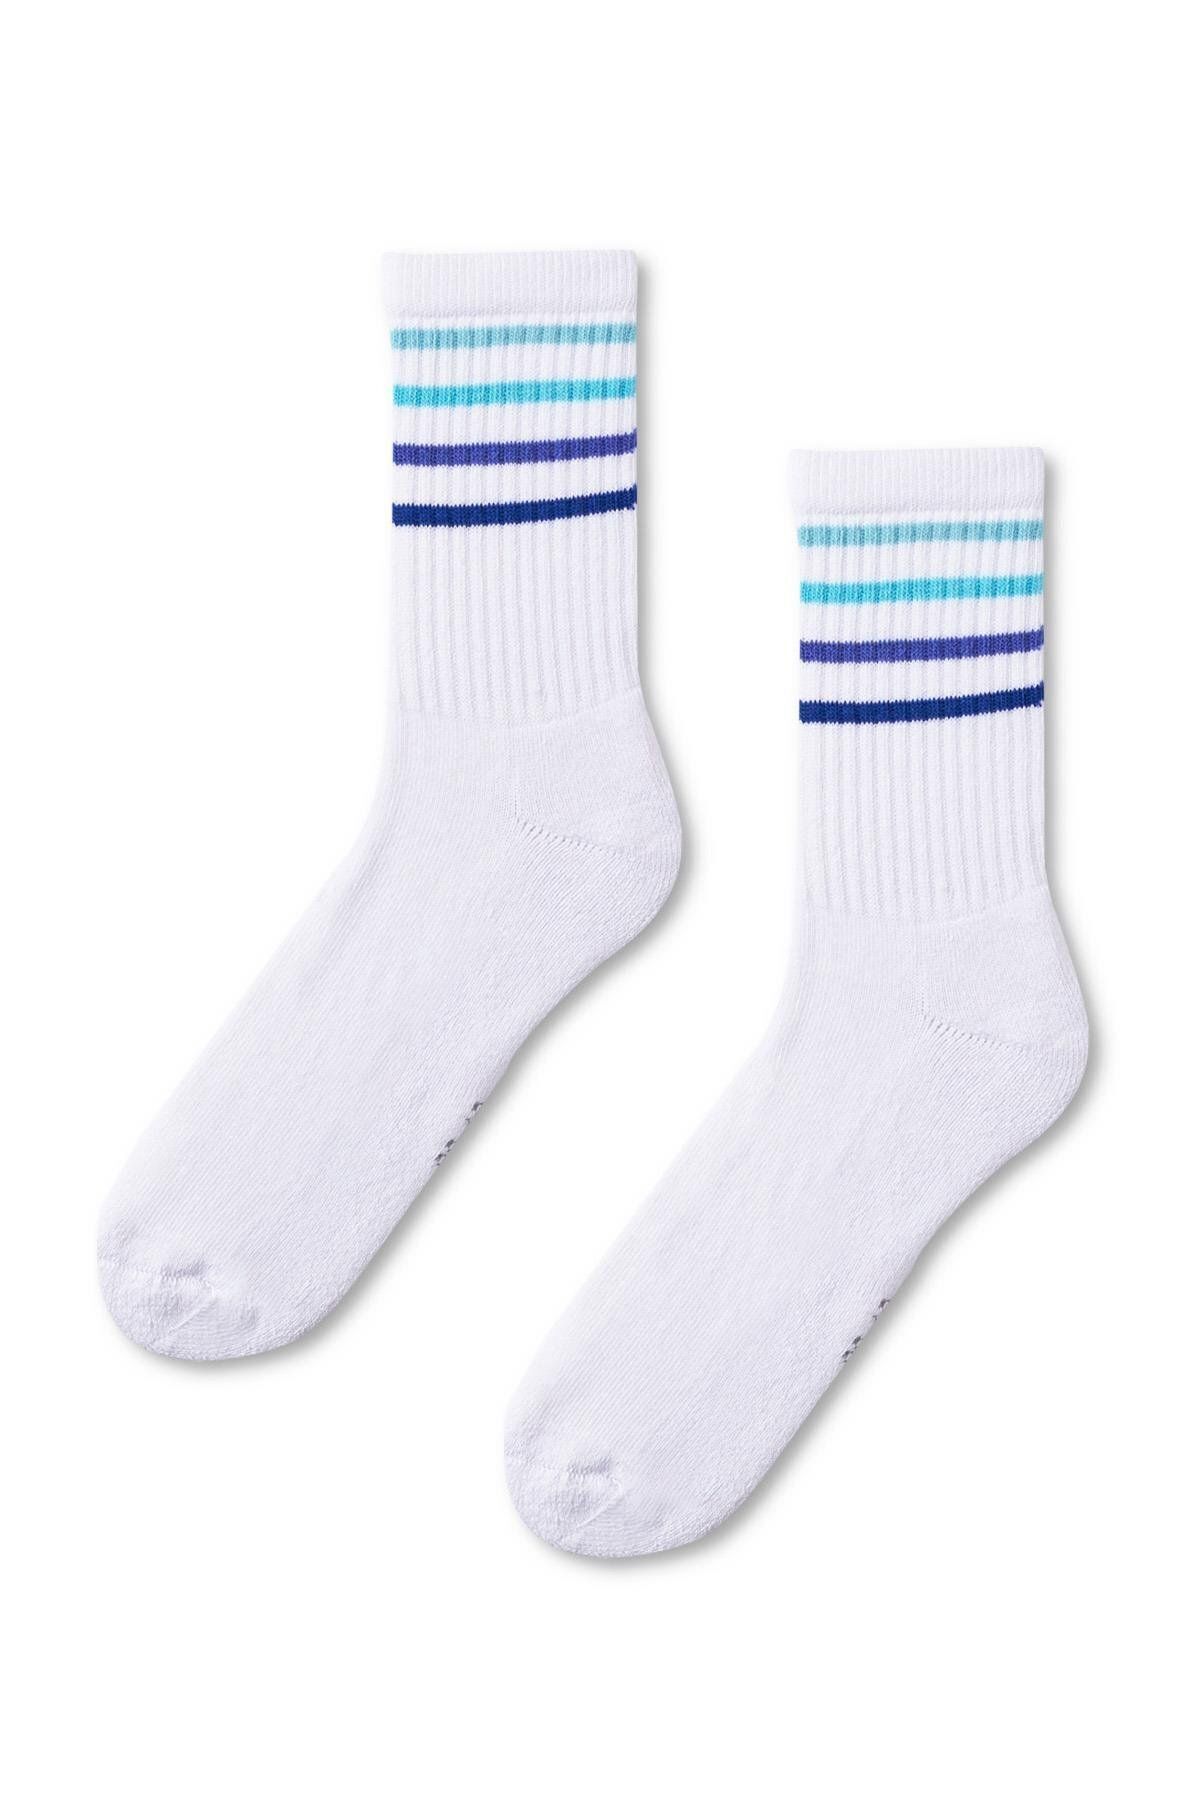 Katia & Bony Renkli Çizgili Havlu Taban Çorap Beyaz/mavi